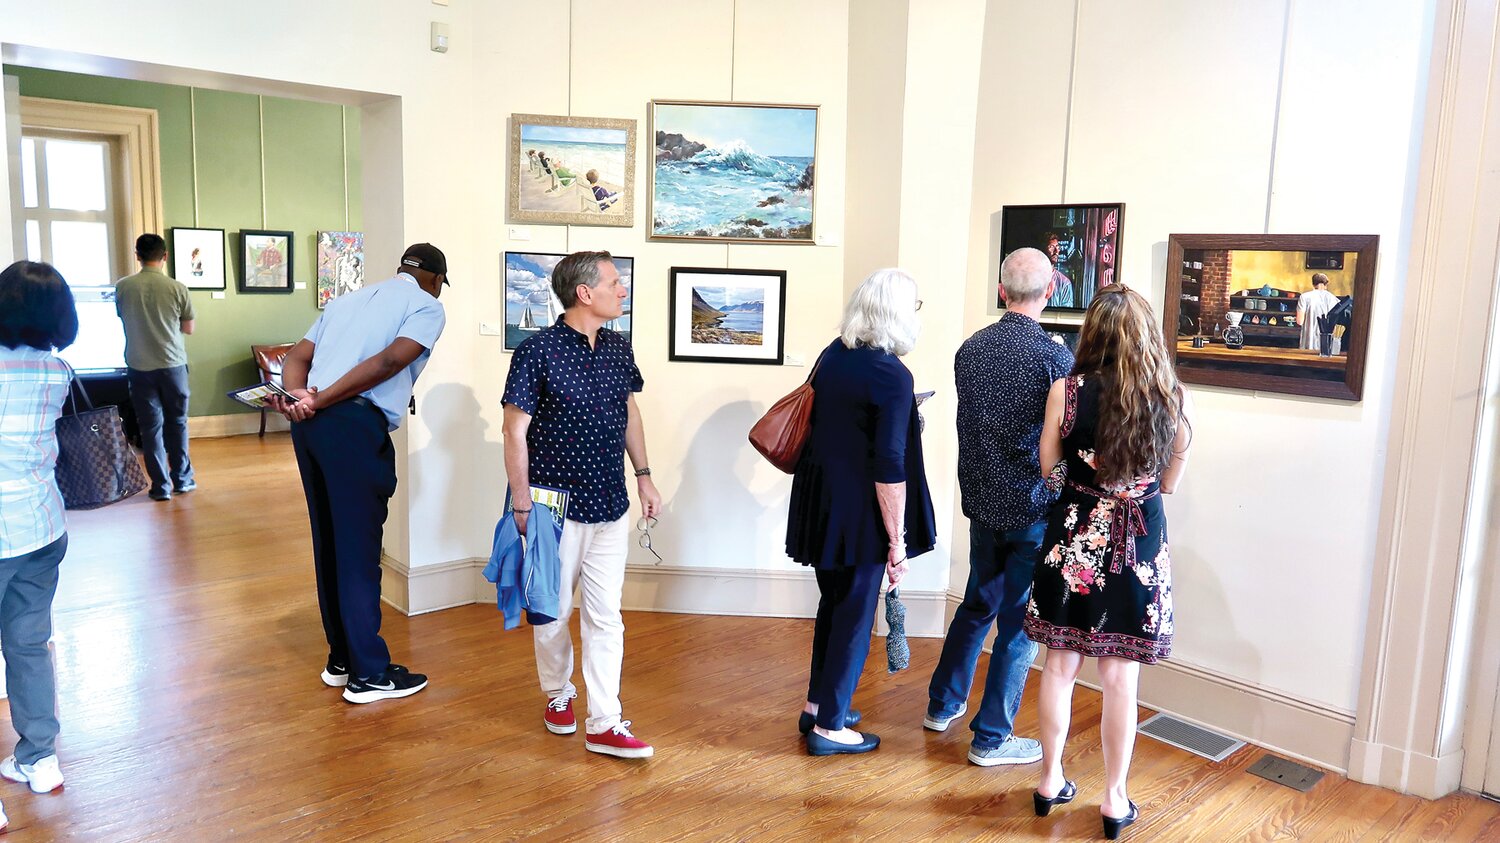 Art lovers peruse the work on display at last year’s Ellarslie Open at the Trenton City Museum.